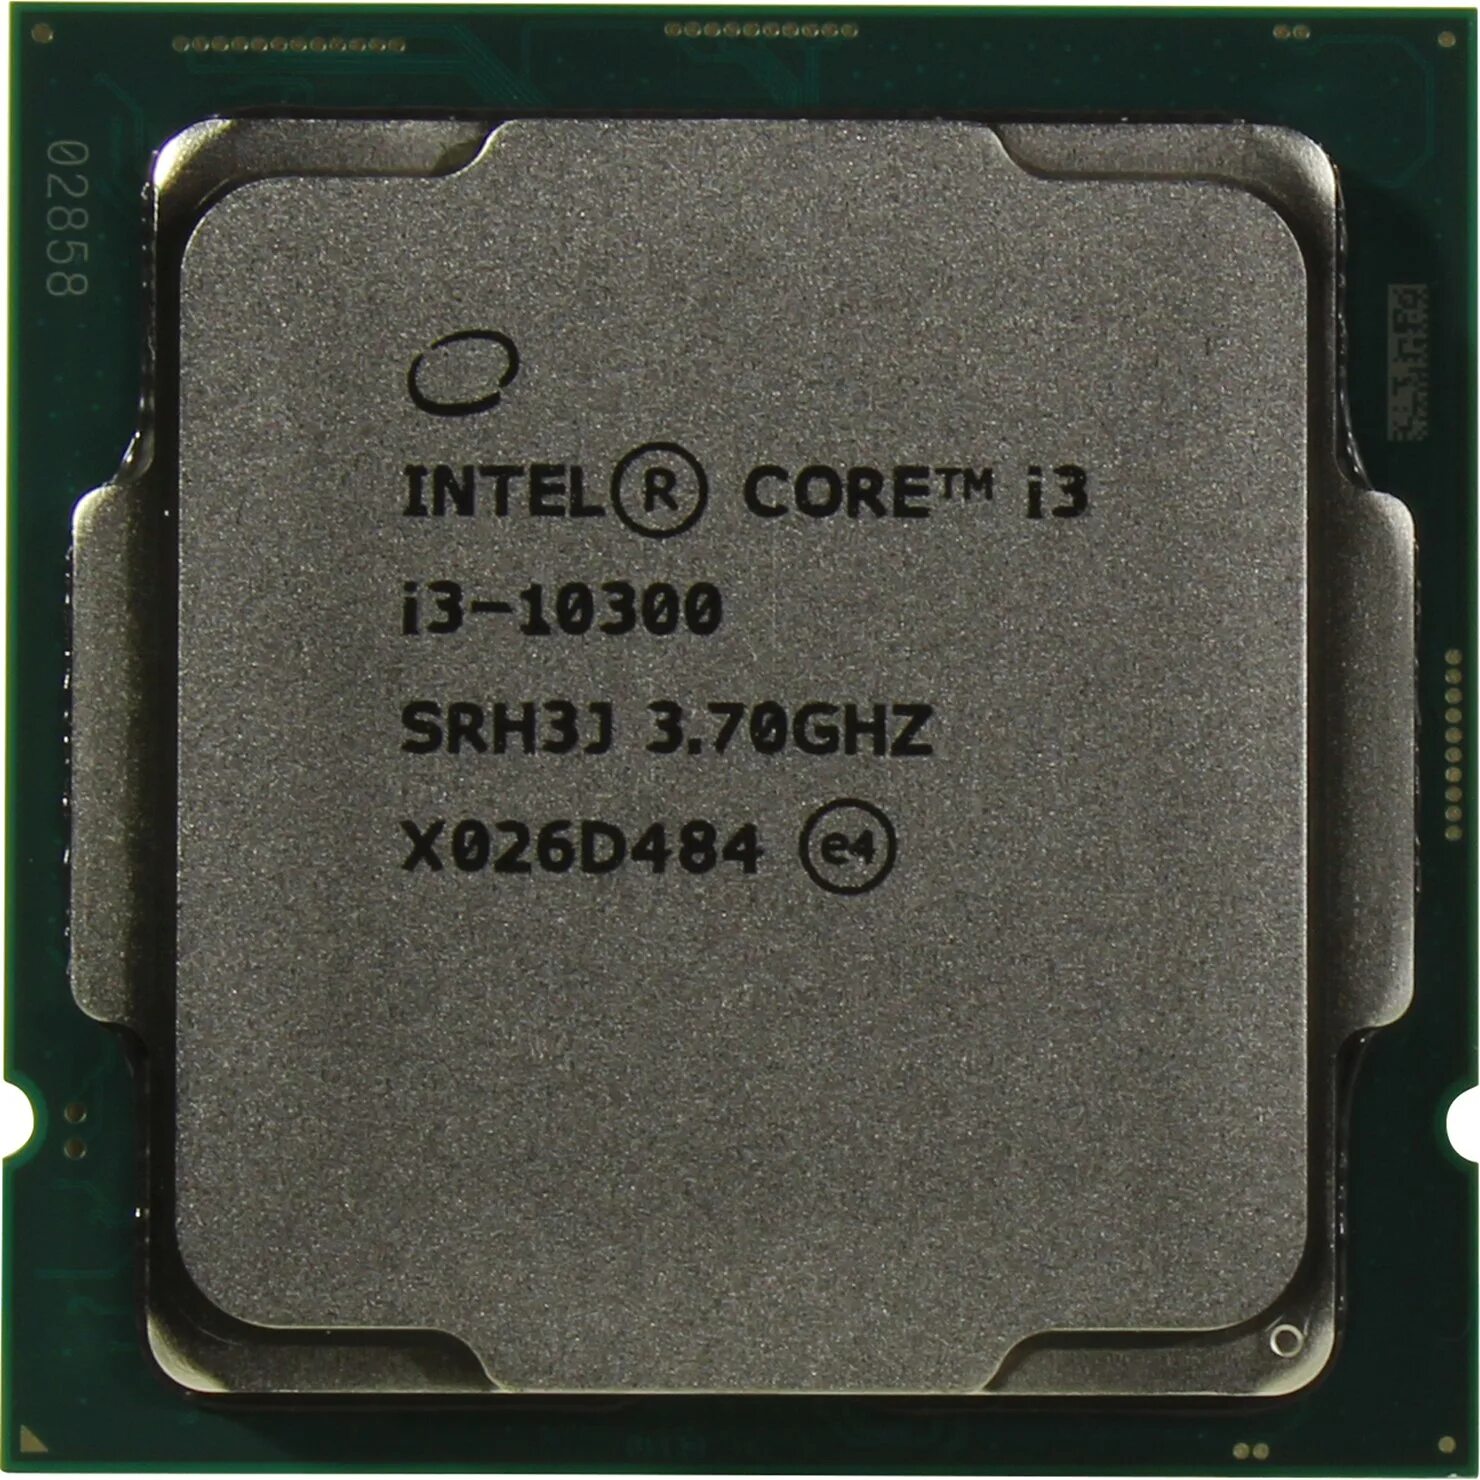 Intel Xeon e-2274g. Процессор Intel XEONE-2274g. Intel Core i3 10300. Intel cm8066201920404sr2l6. Процессор модели памяти